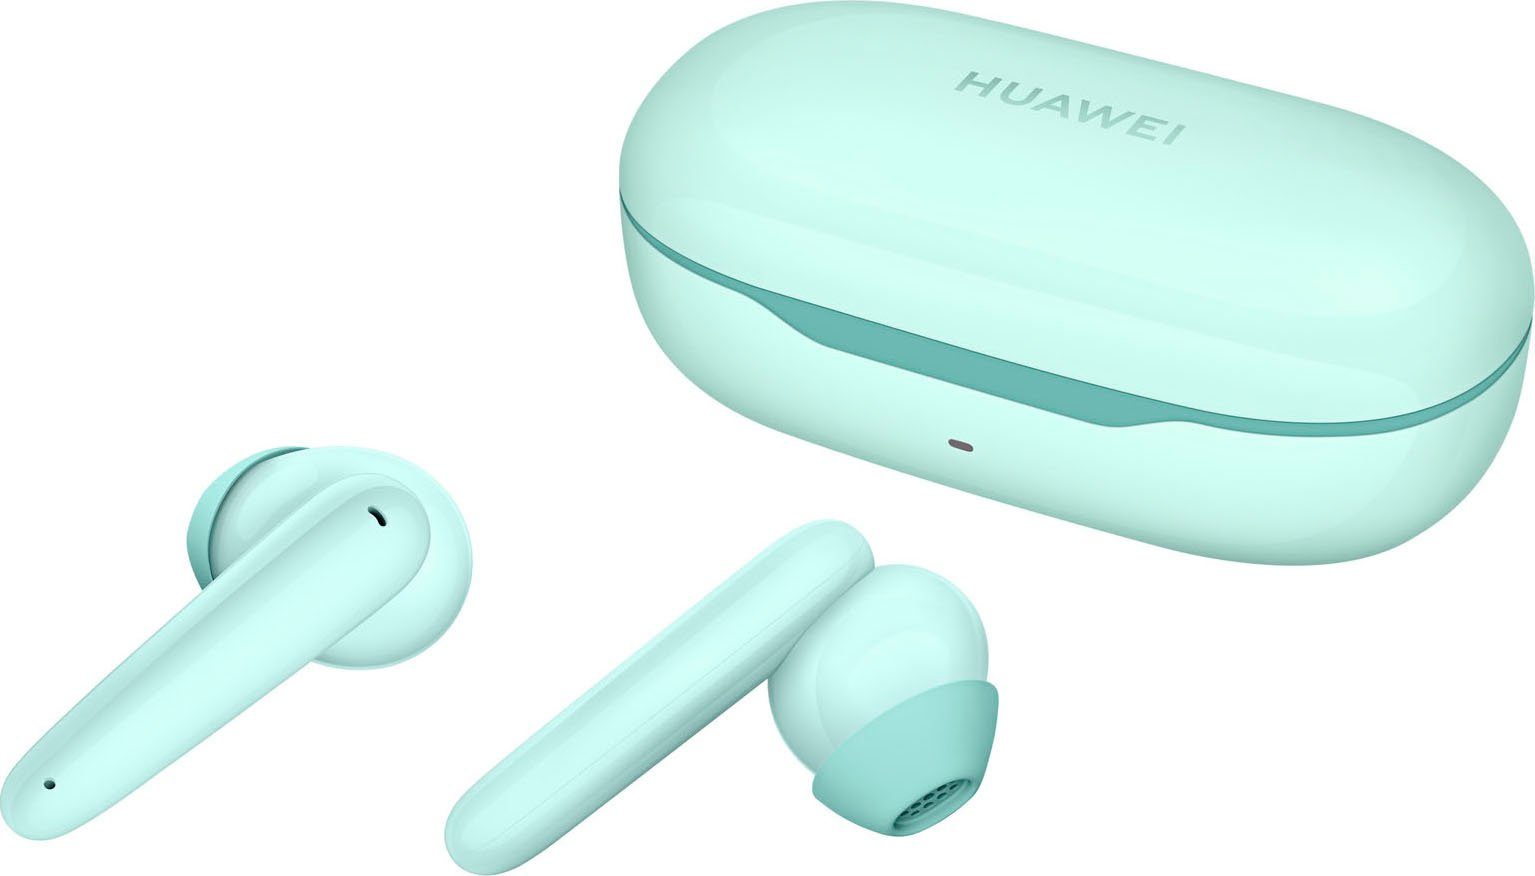 Kristallklarer wireless Huawei SE Akkulaufzeit) Blau Sound, (Premium-Design, In-Ear-Kopfhörer FreeBuds Lange